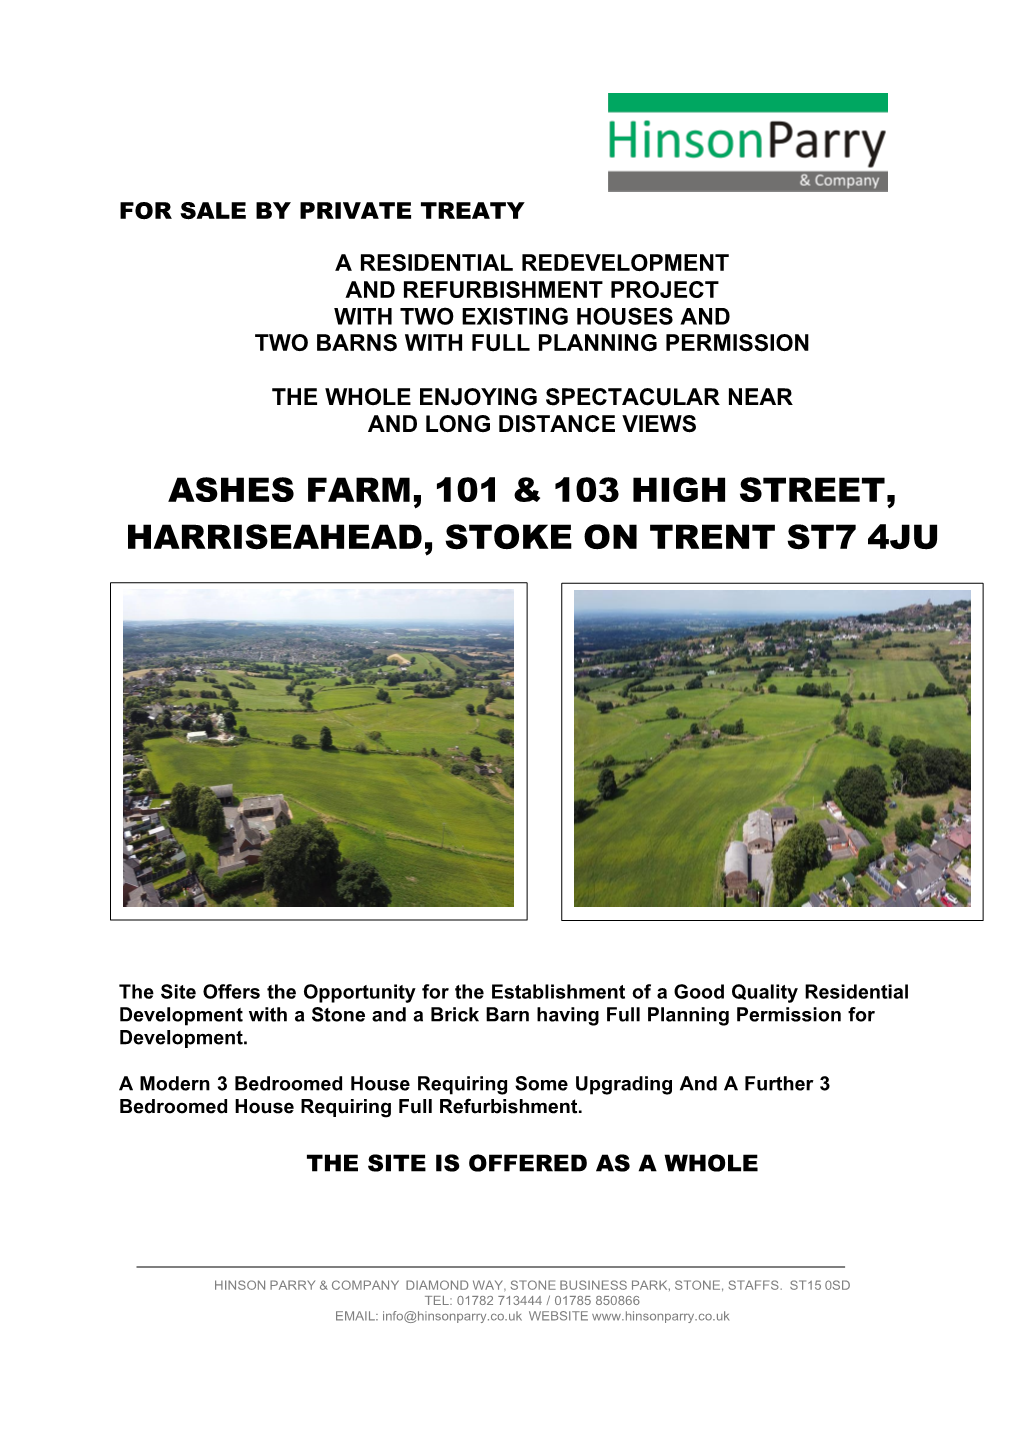 Ashes Farm, 101 & 103 High Street, Harriseahead, Stoke